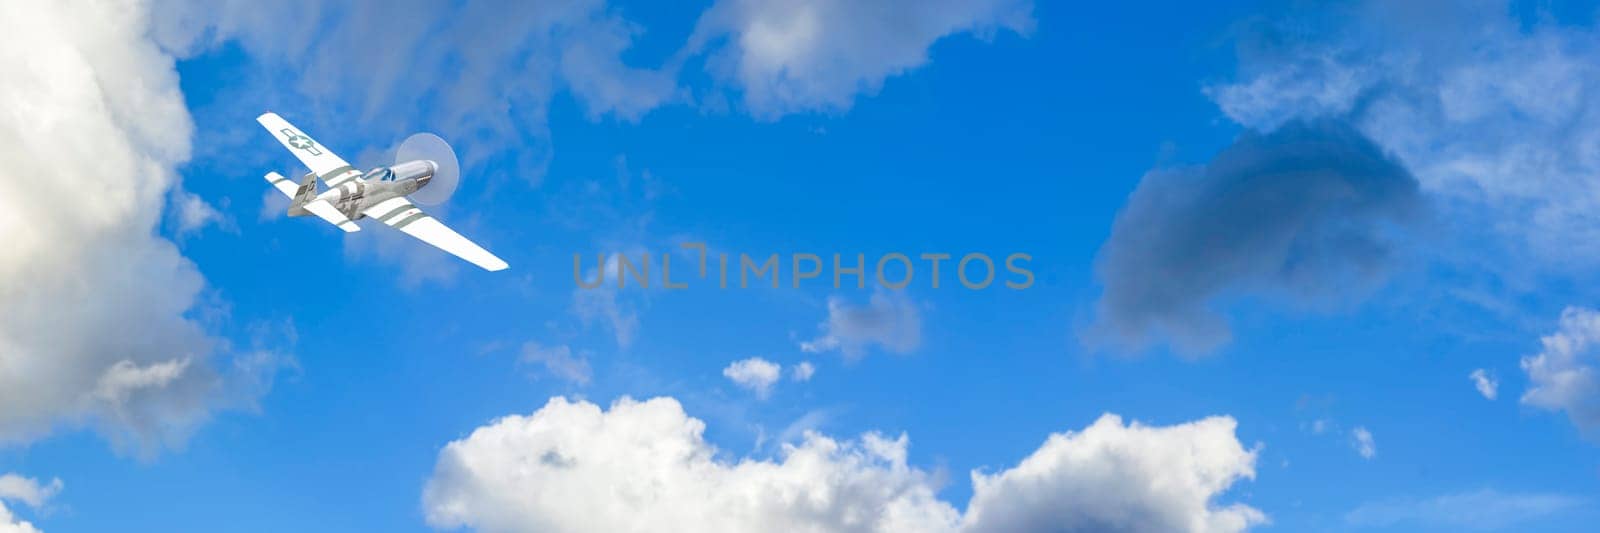 Soaring High: Single Propeller Airplane Gliding in Vast Blue Sky Amongst Clouds by Juanjo39